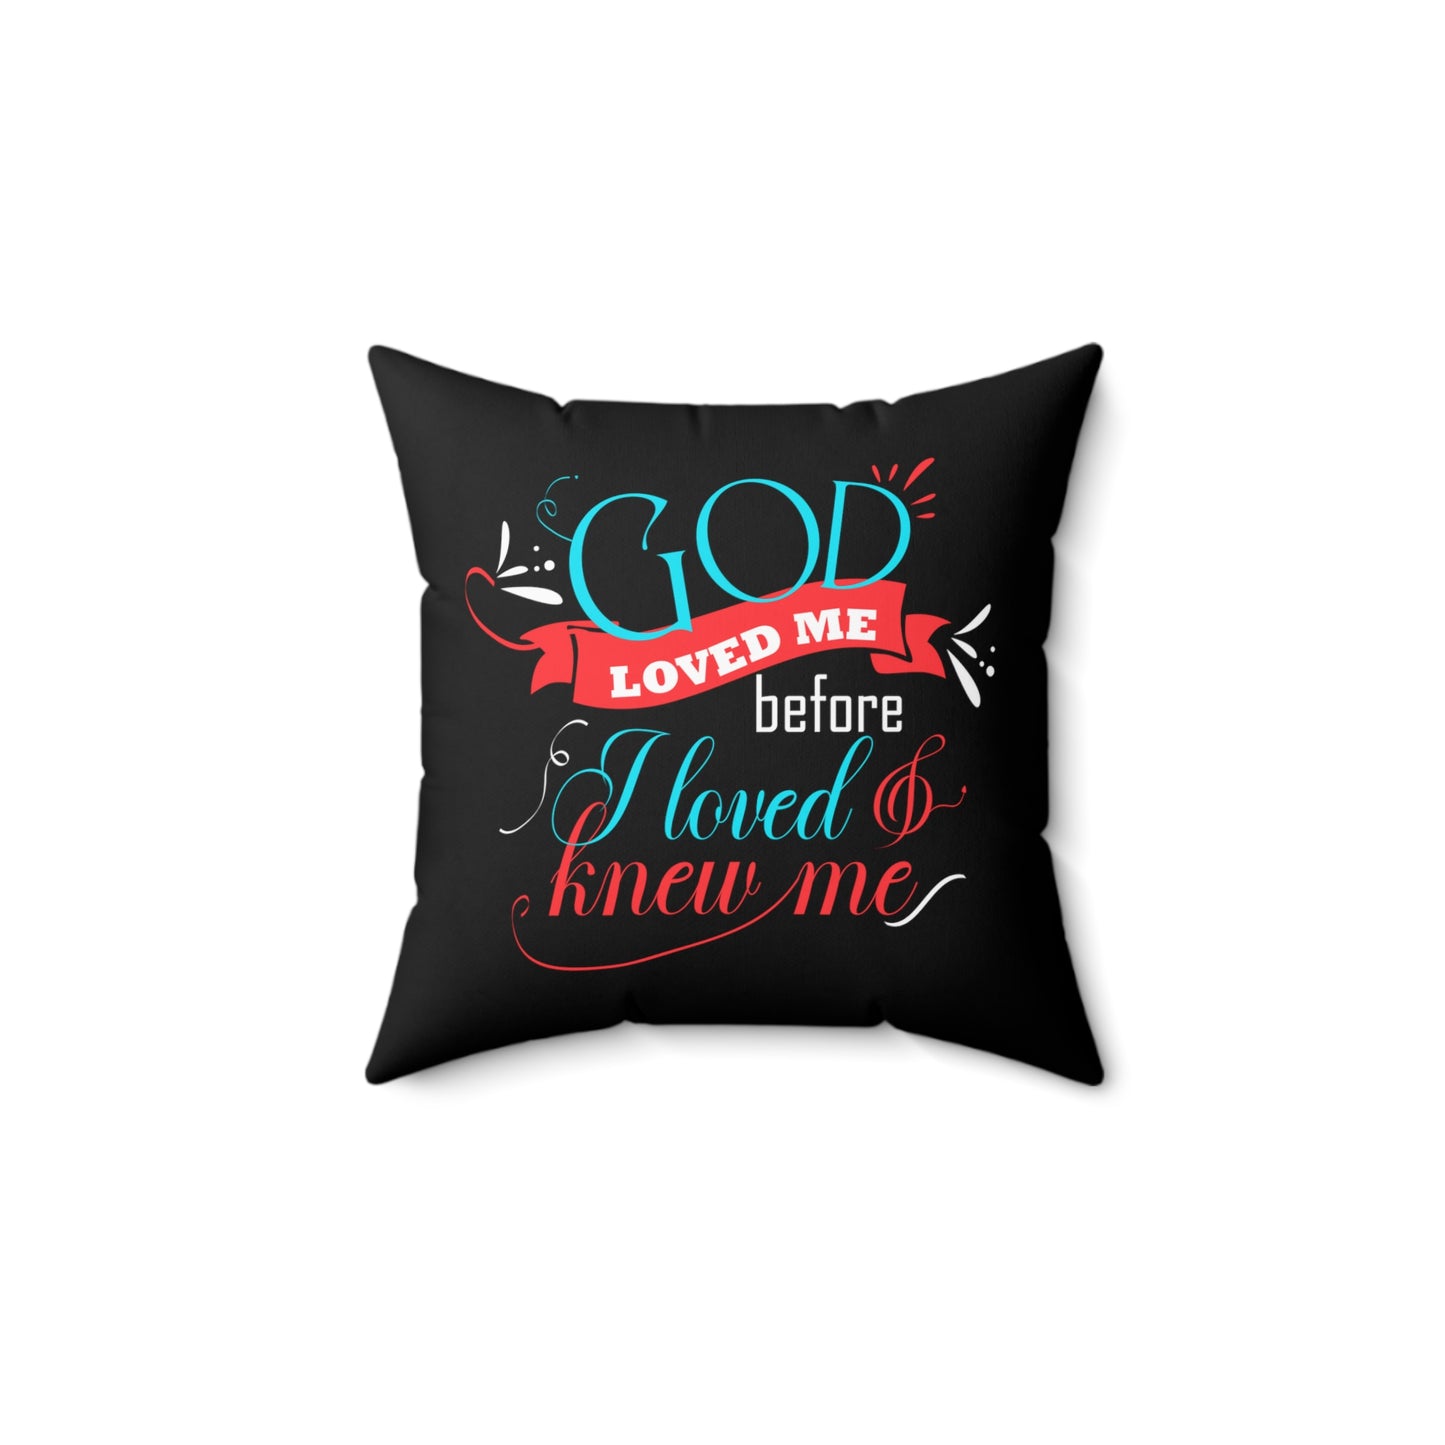 God Loved Me Before I Loved & Knew Me Pillow